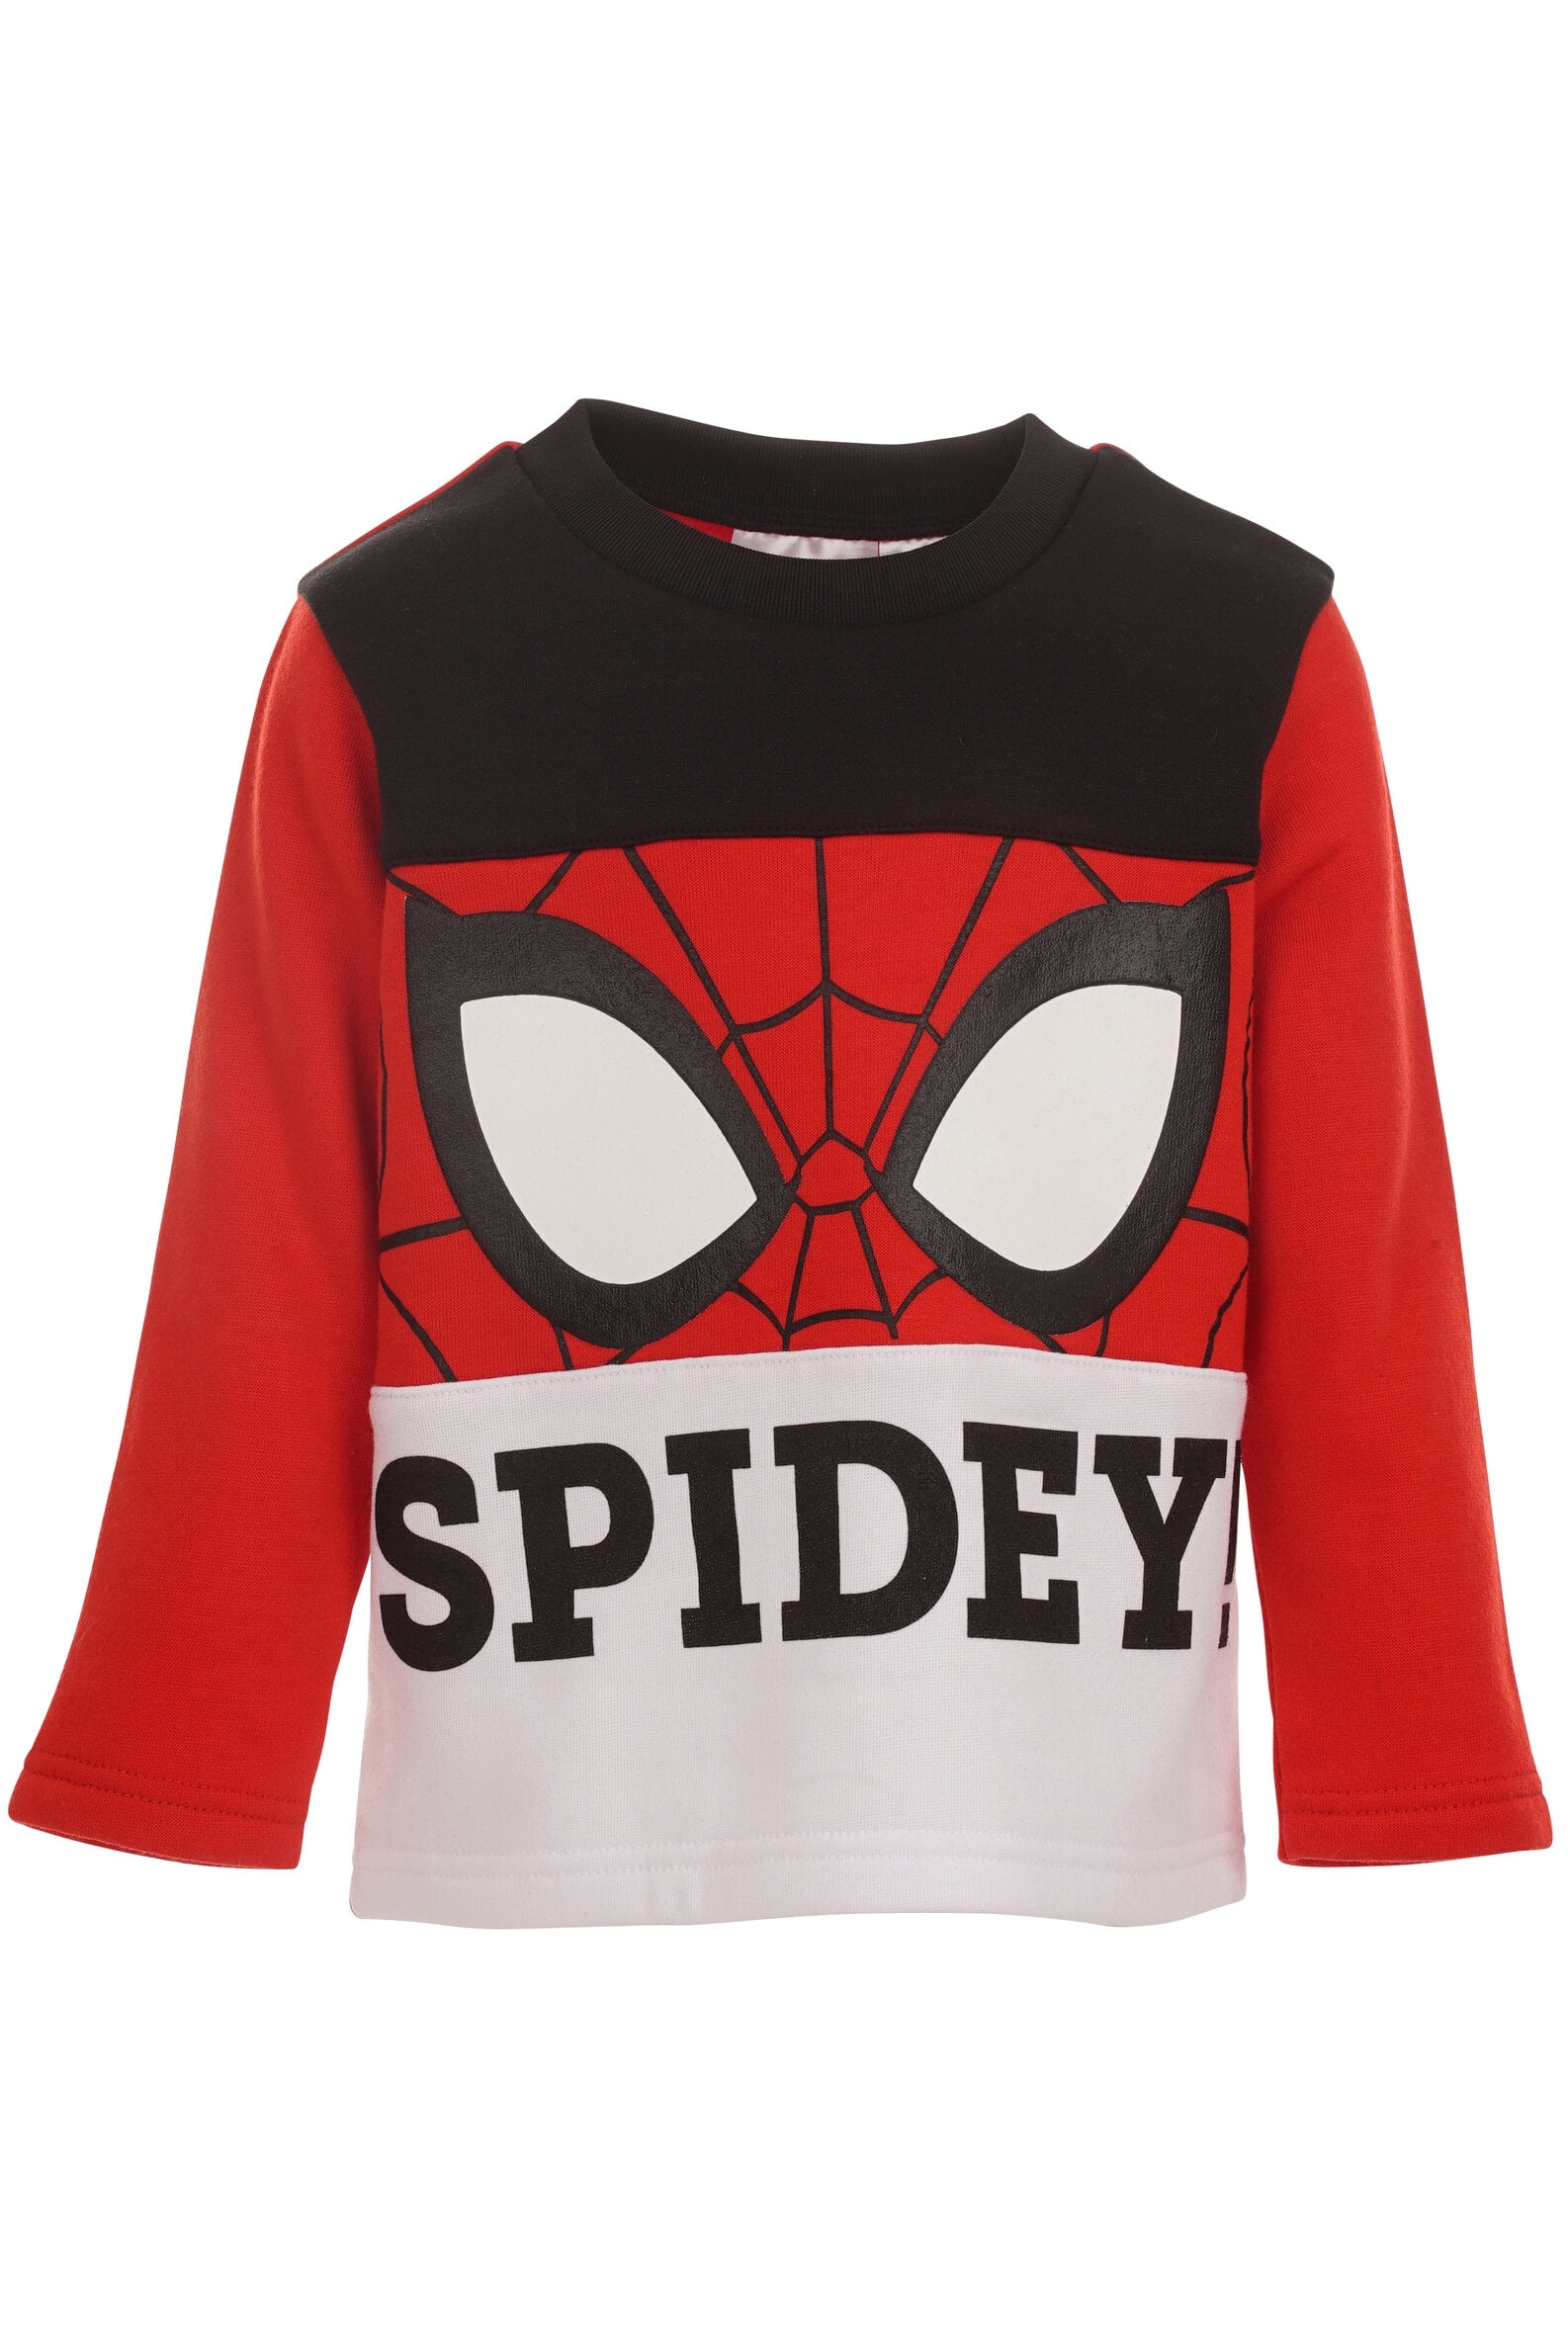 Marvel Spider-Man Toddler Boys Fleece Sweatshirt and Pants Set Toddler to  Big Kid